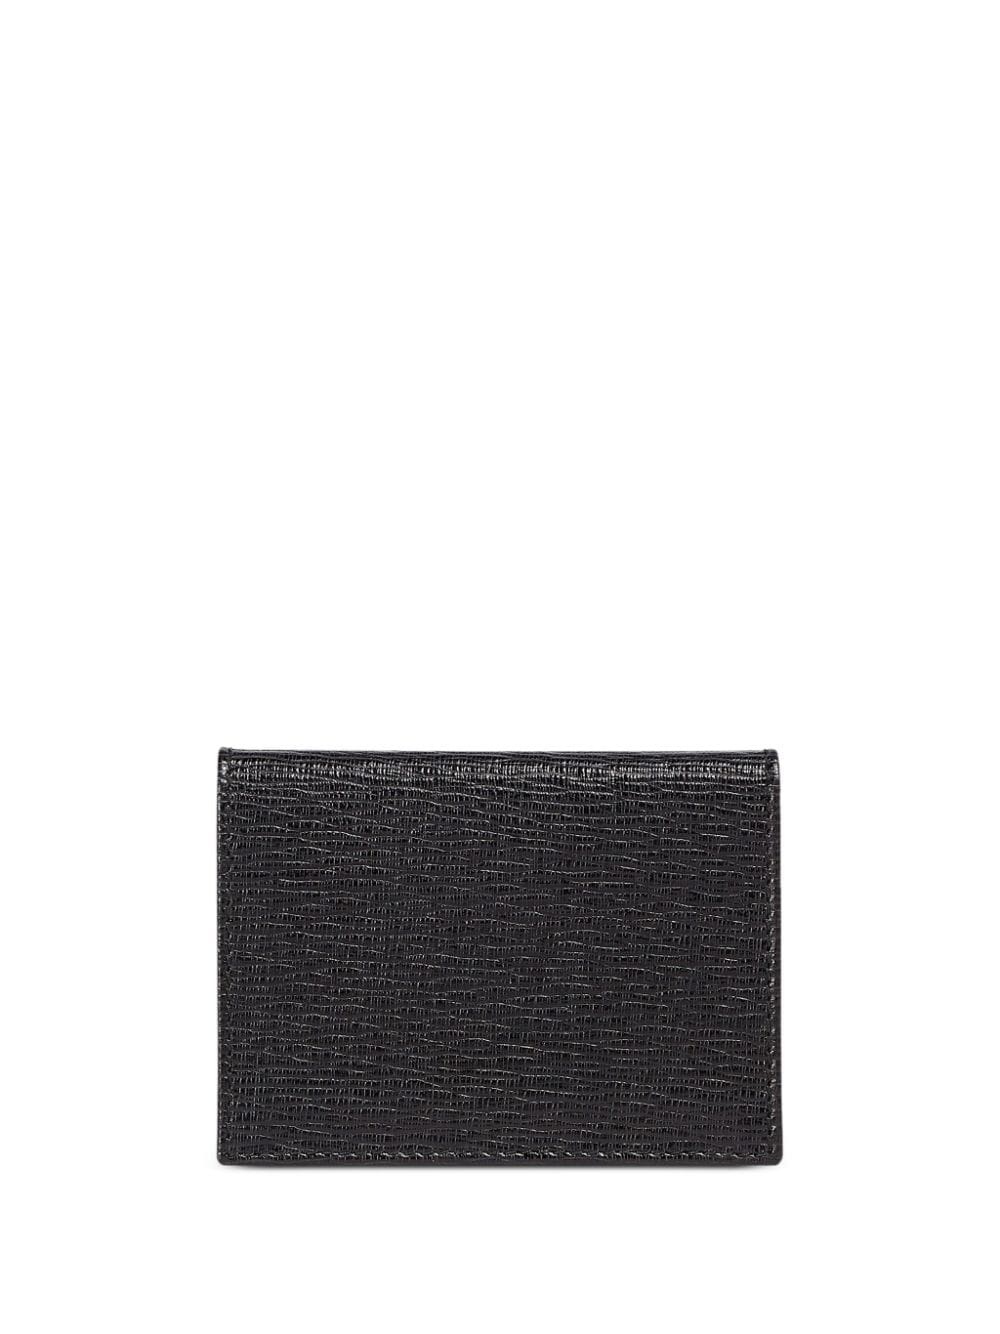 Gancini leather card holder - 2